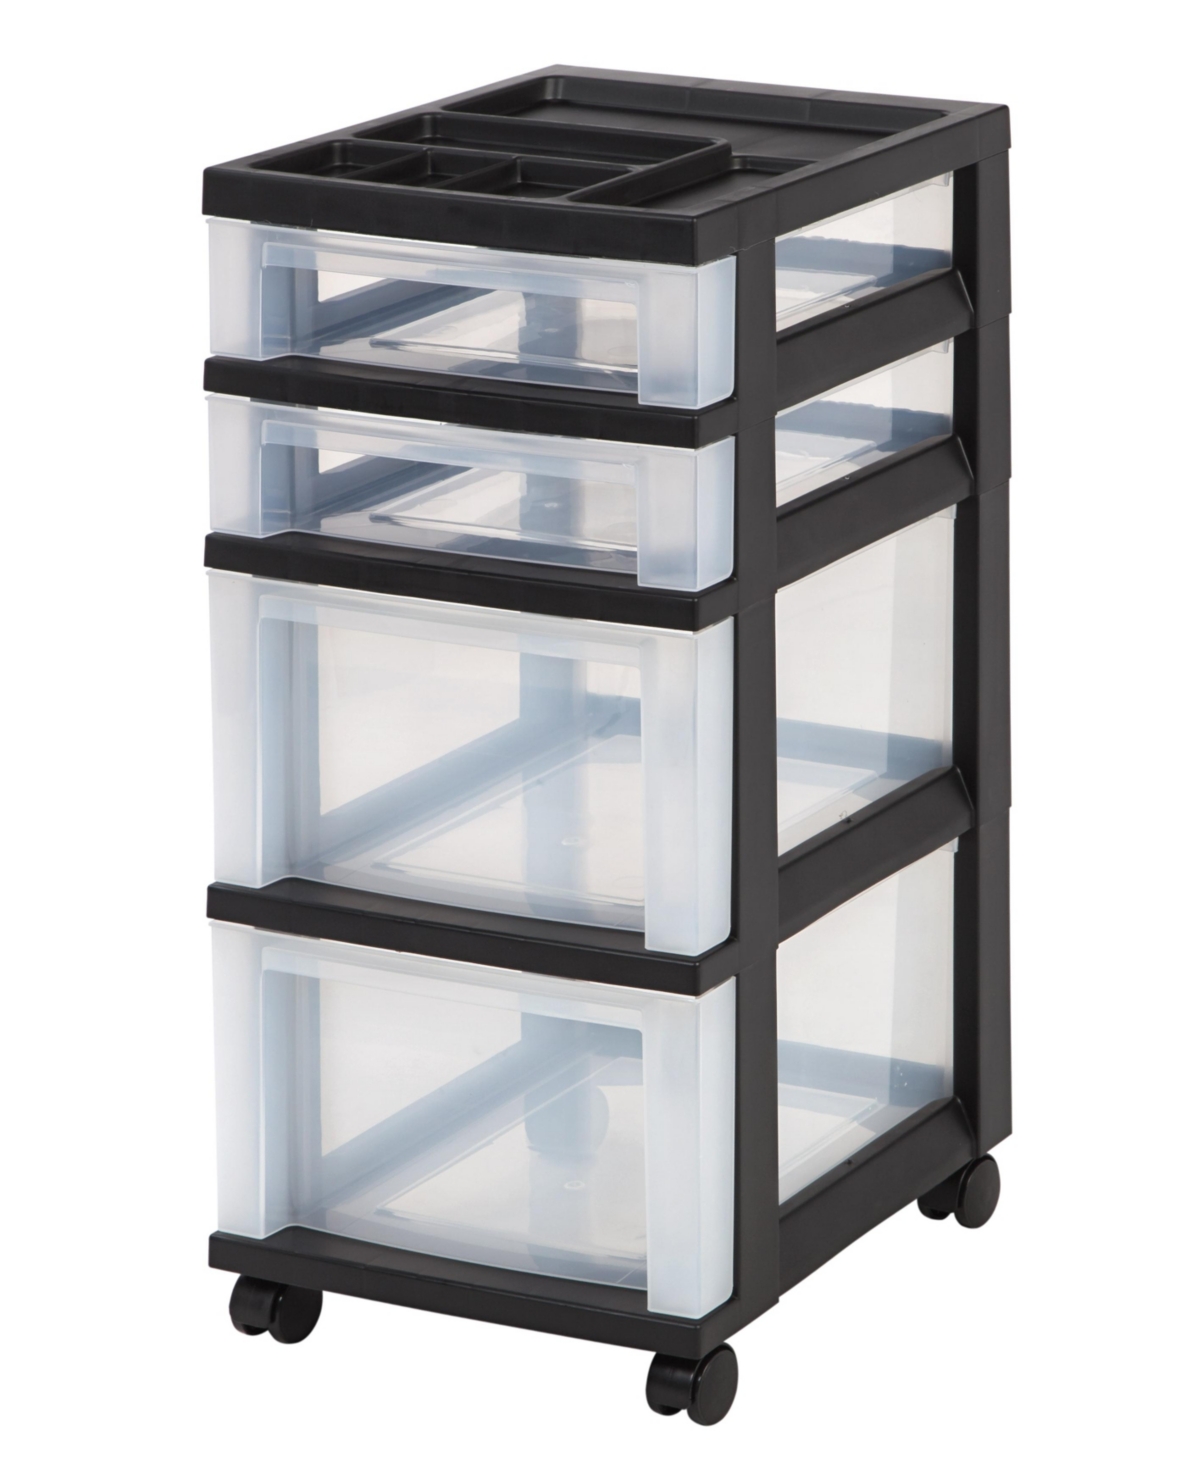 4 Drawer Rolling Storage Cart with Organizer Top, Black - Black